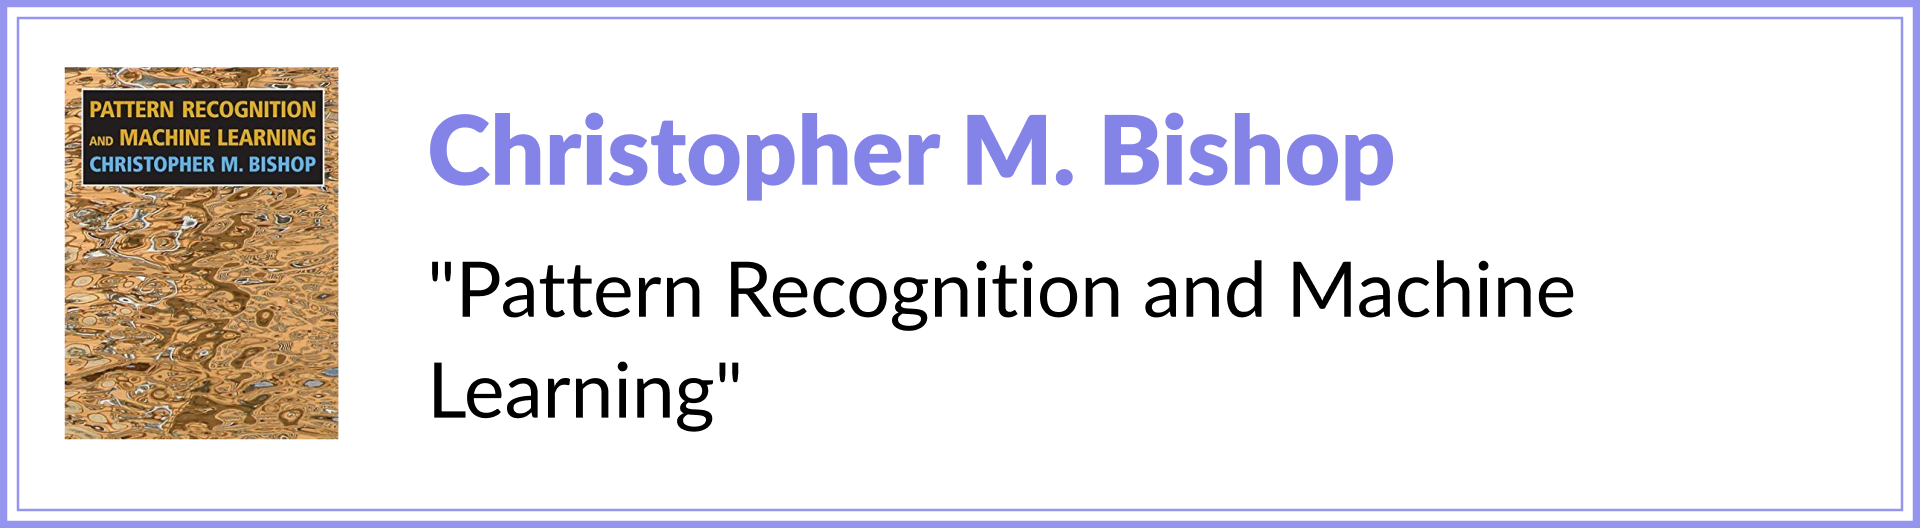 Christopher M. Bishop 